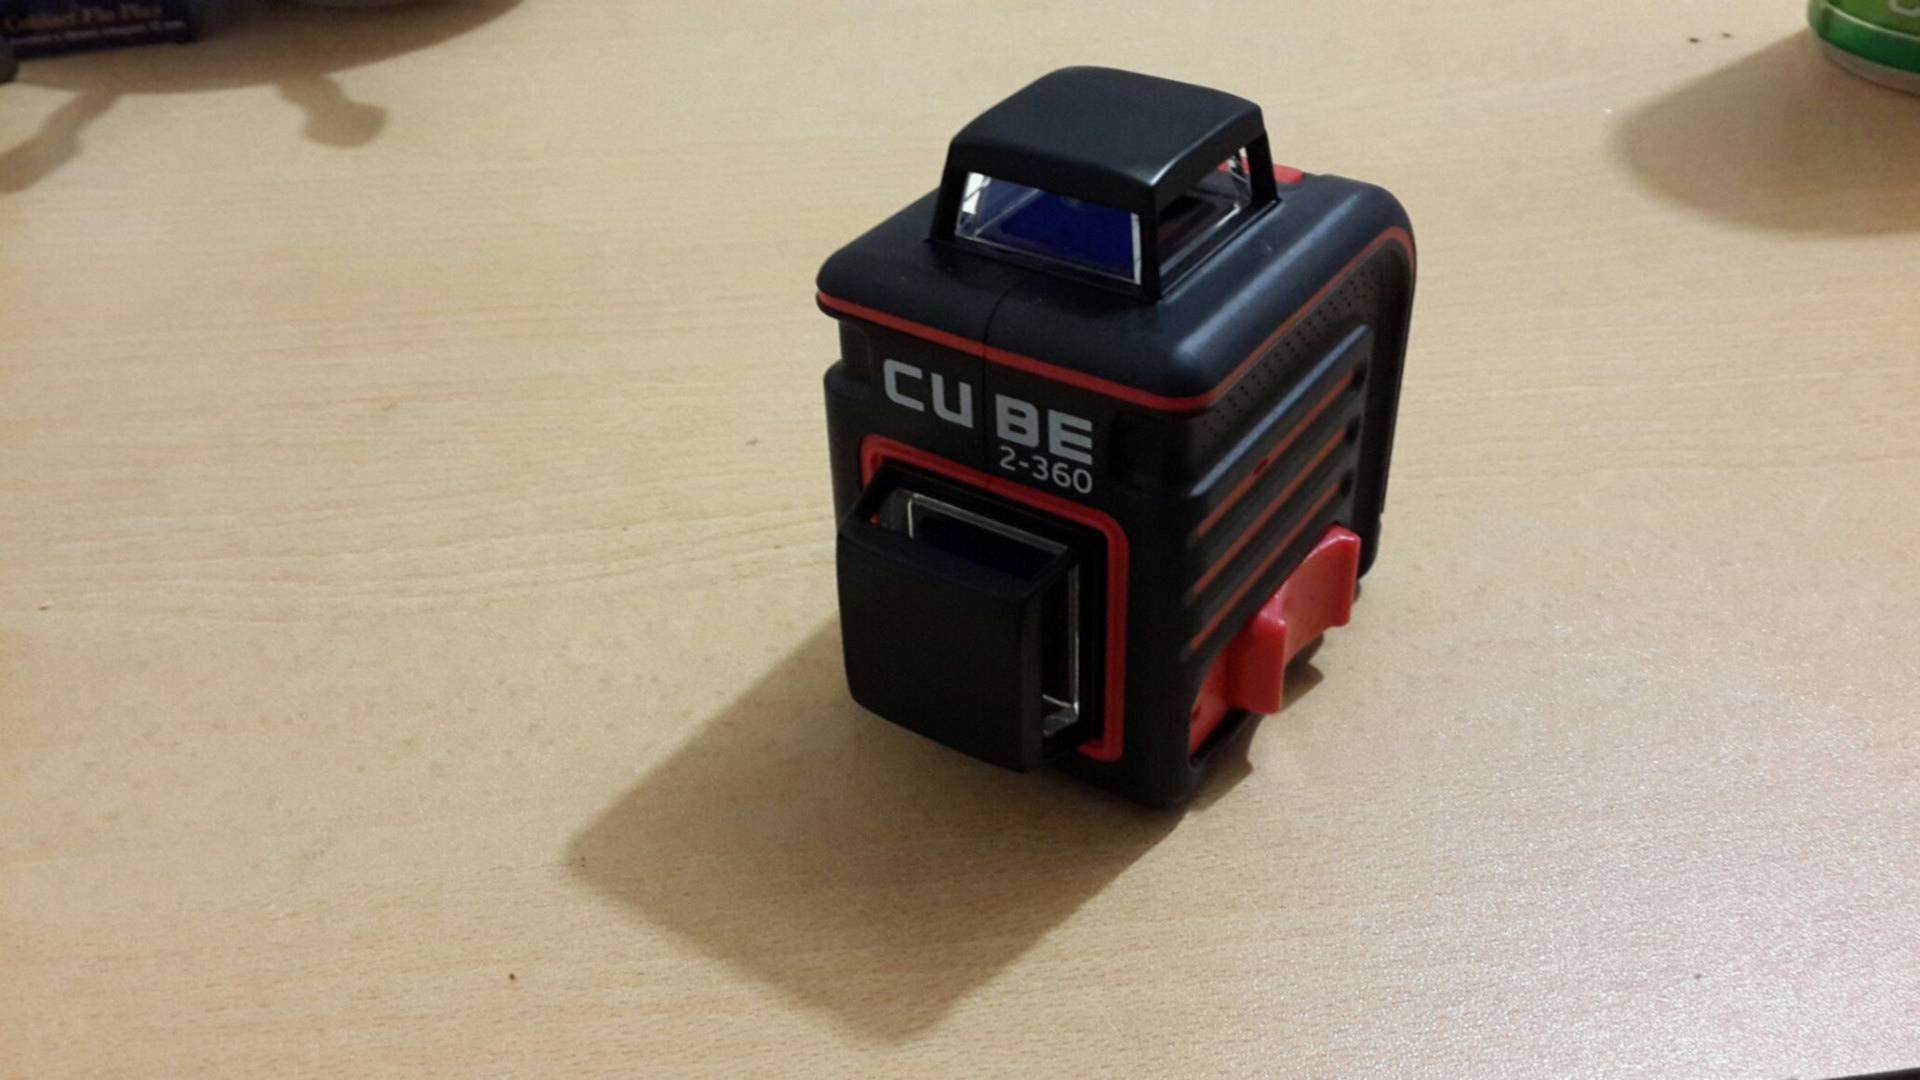 Ada cube ultimate